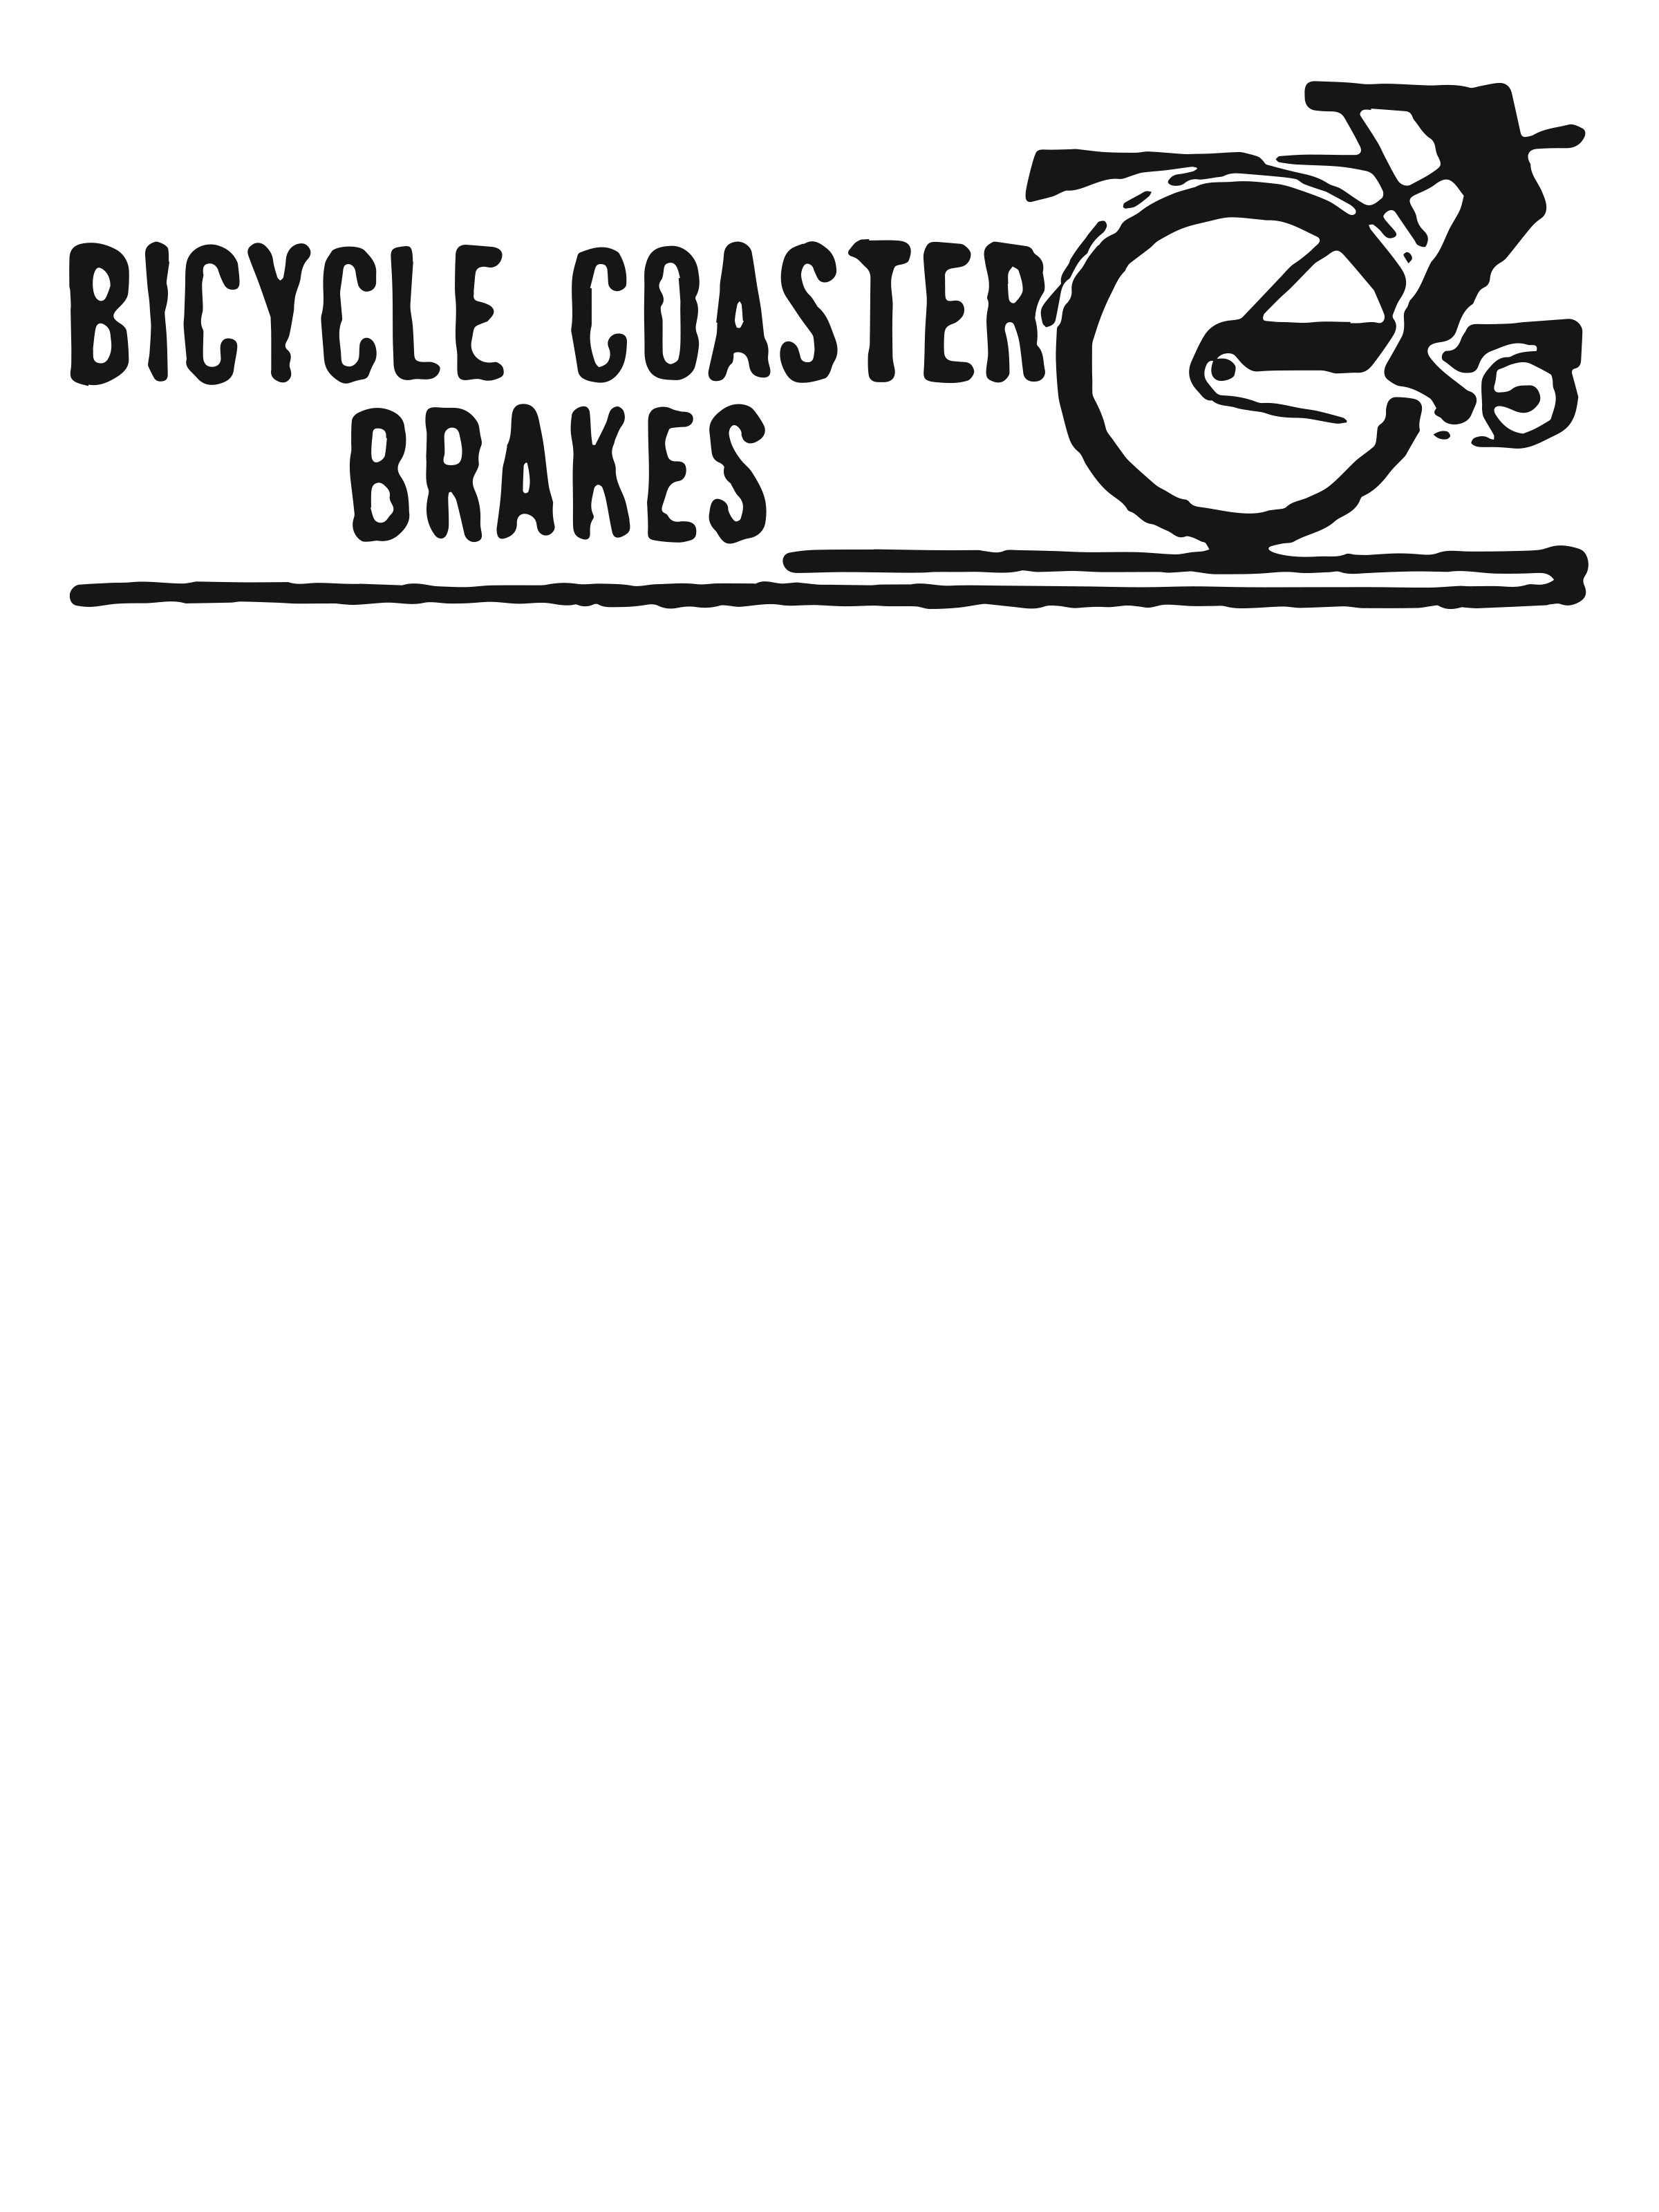 0374 – Bicycle Coaster Brakes